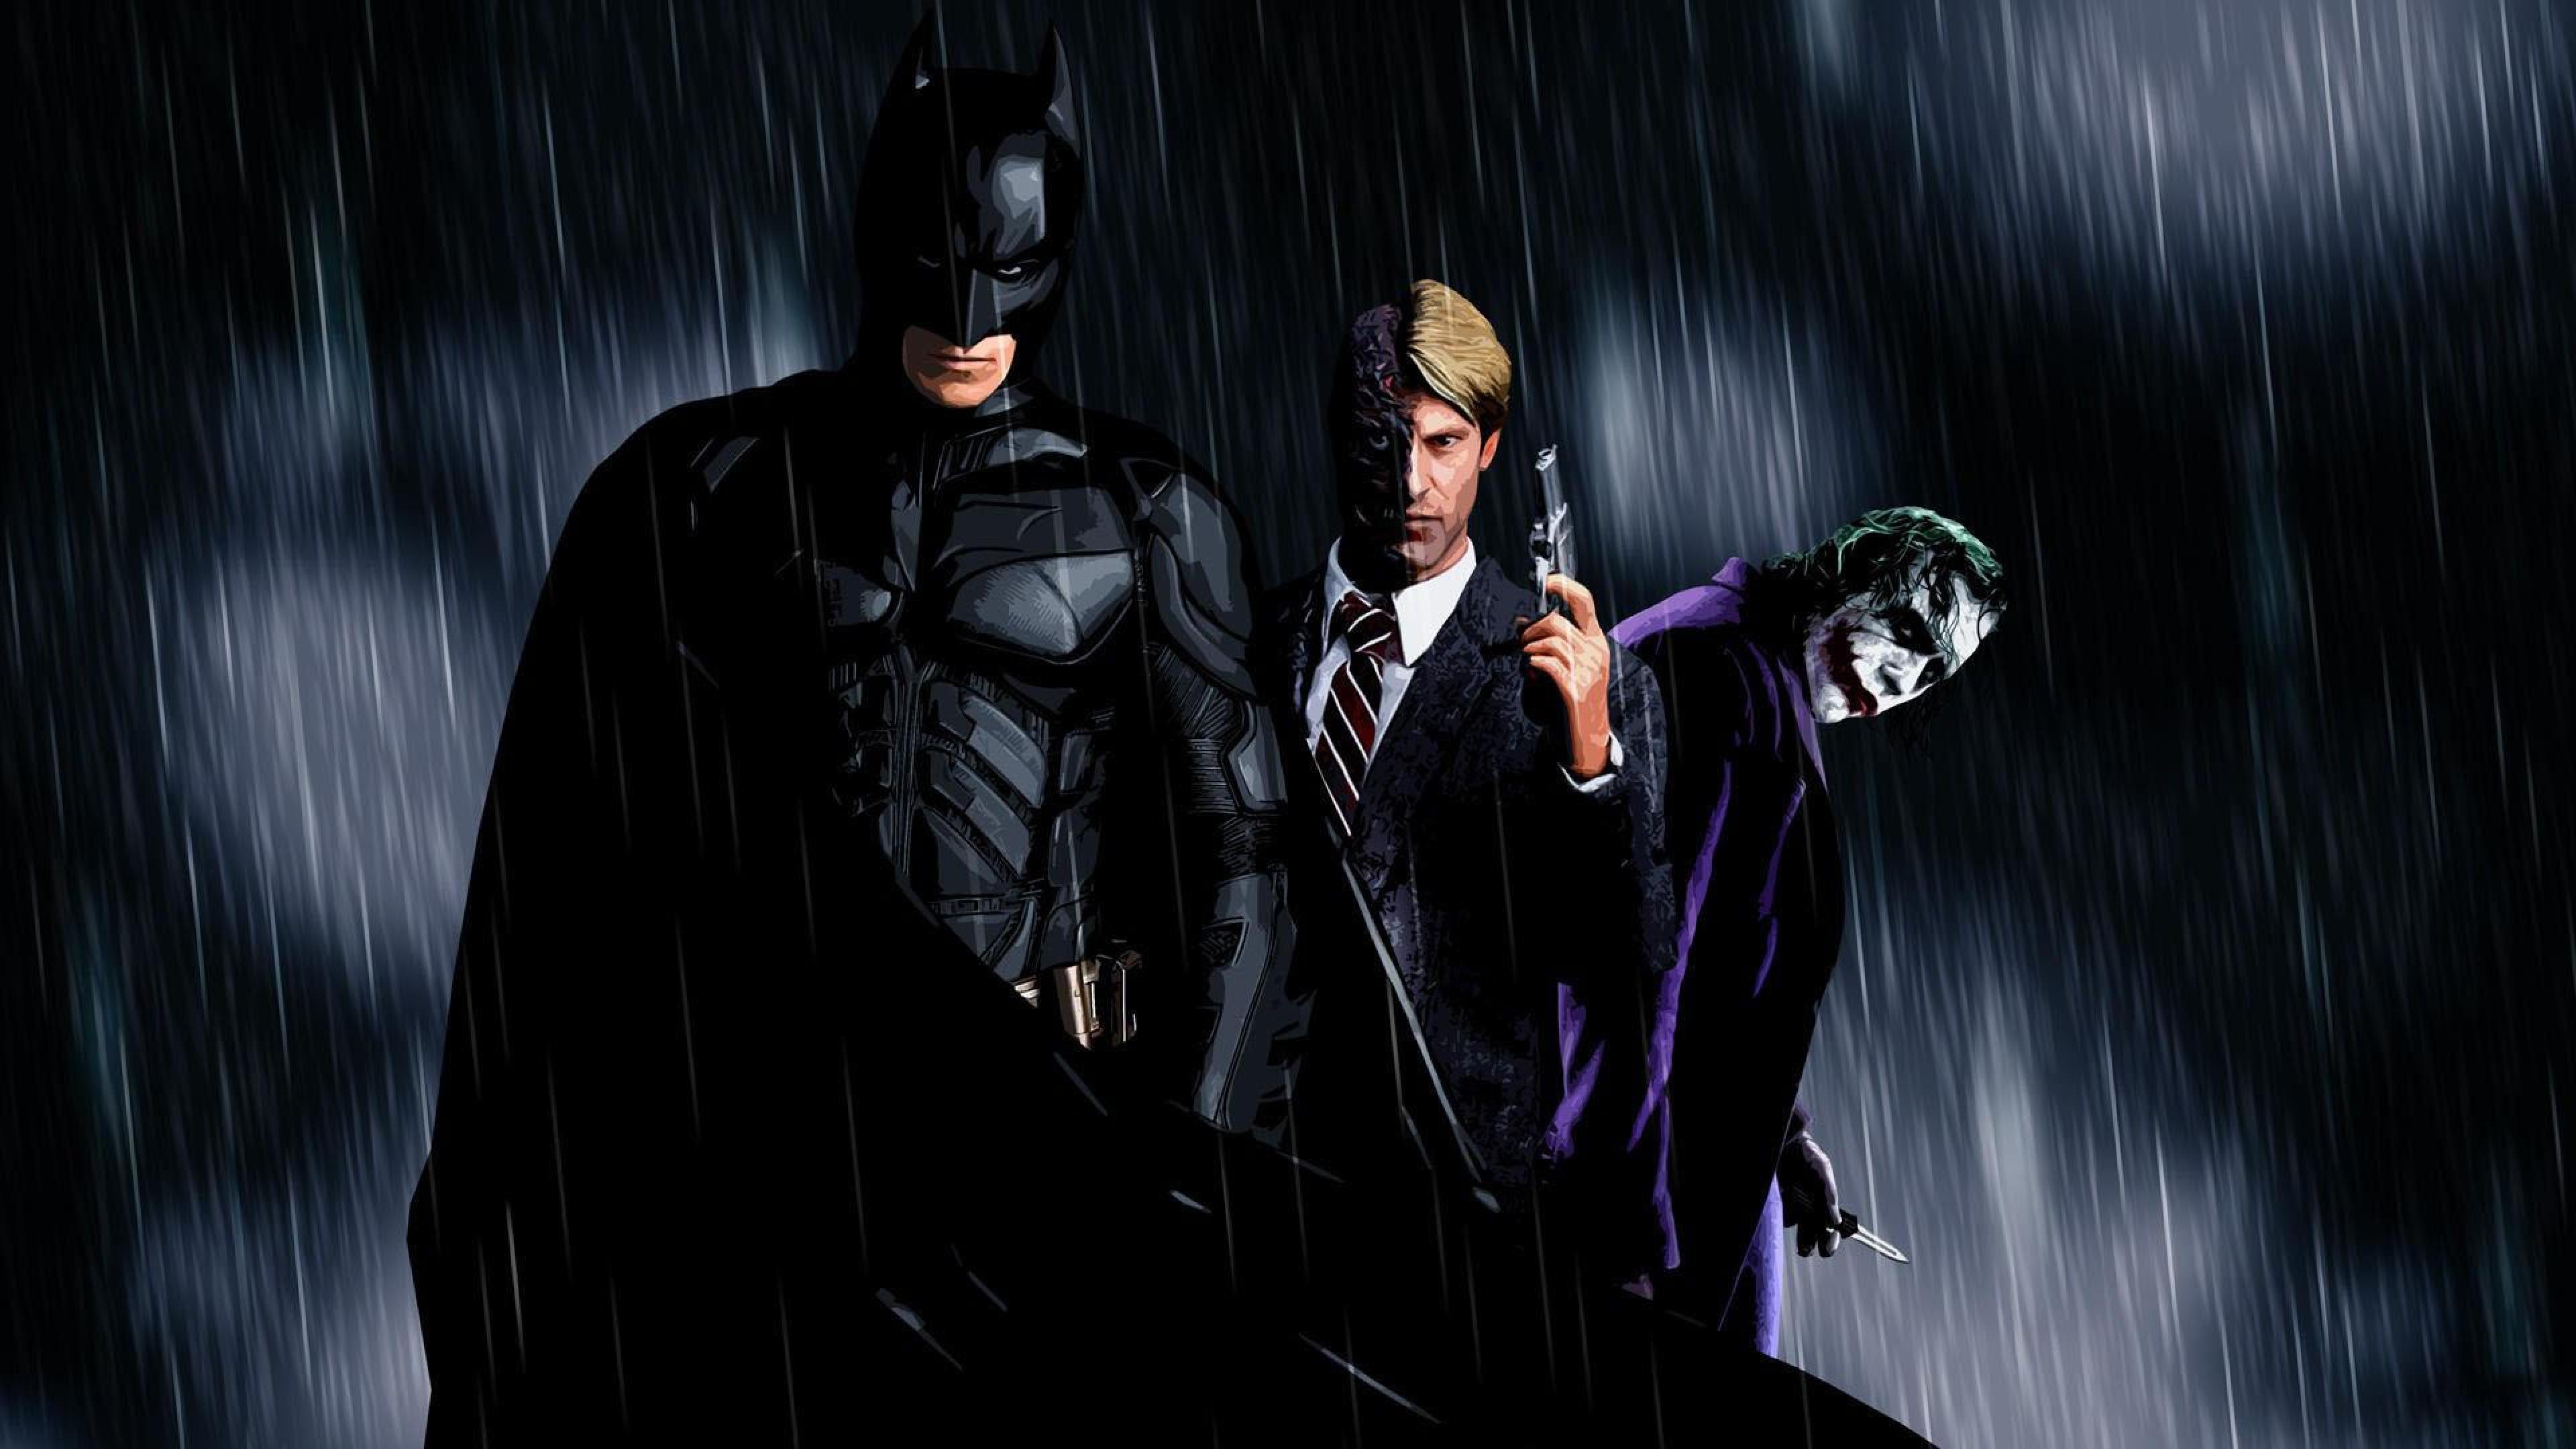 Batman Aaron Eckhart Two Face The Joker Hd Wallpapers For Laptop Widescreen  Free Download : 